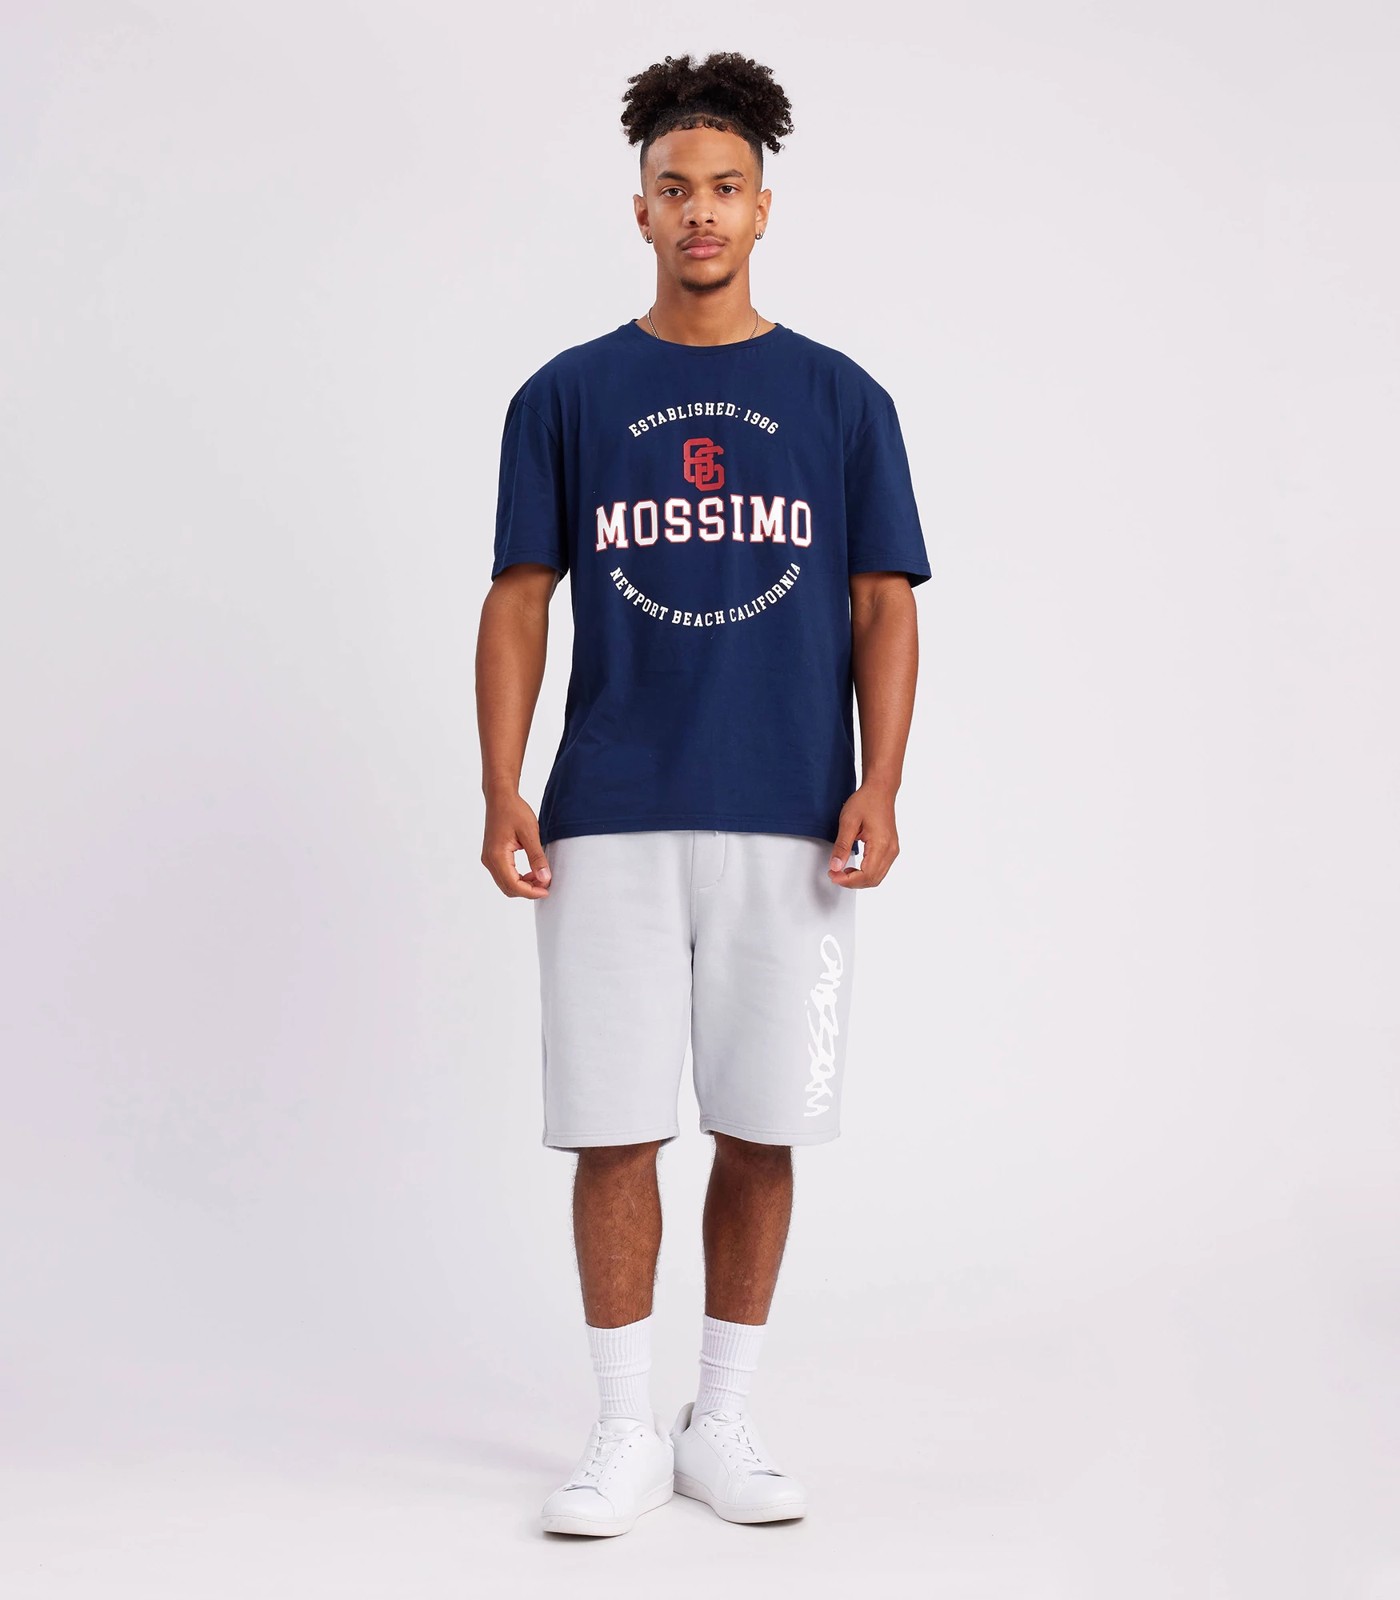 Mossimo T-Shirt | Target Australia